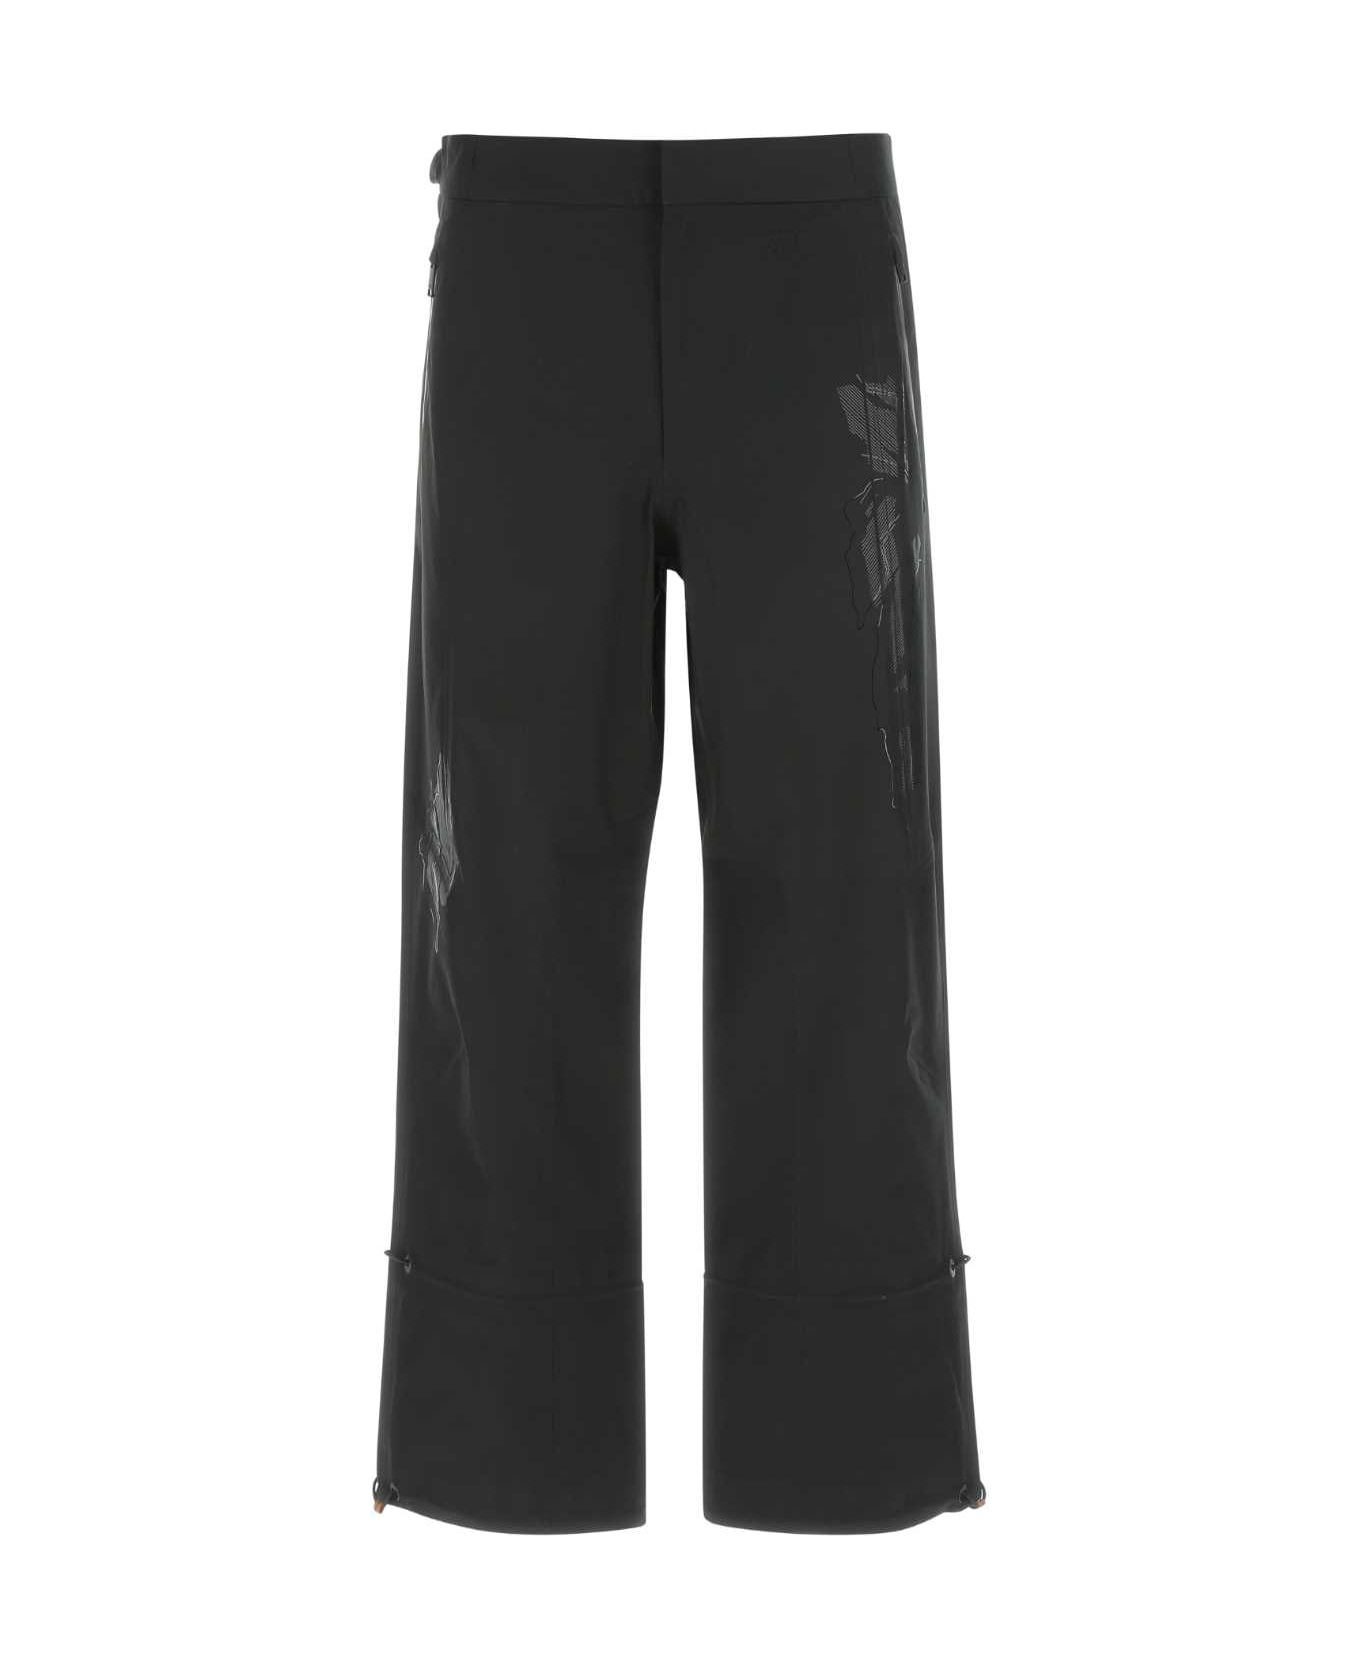 Zegna Black Polyester Pant - K09